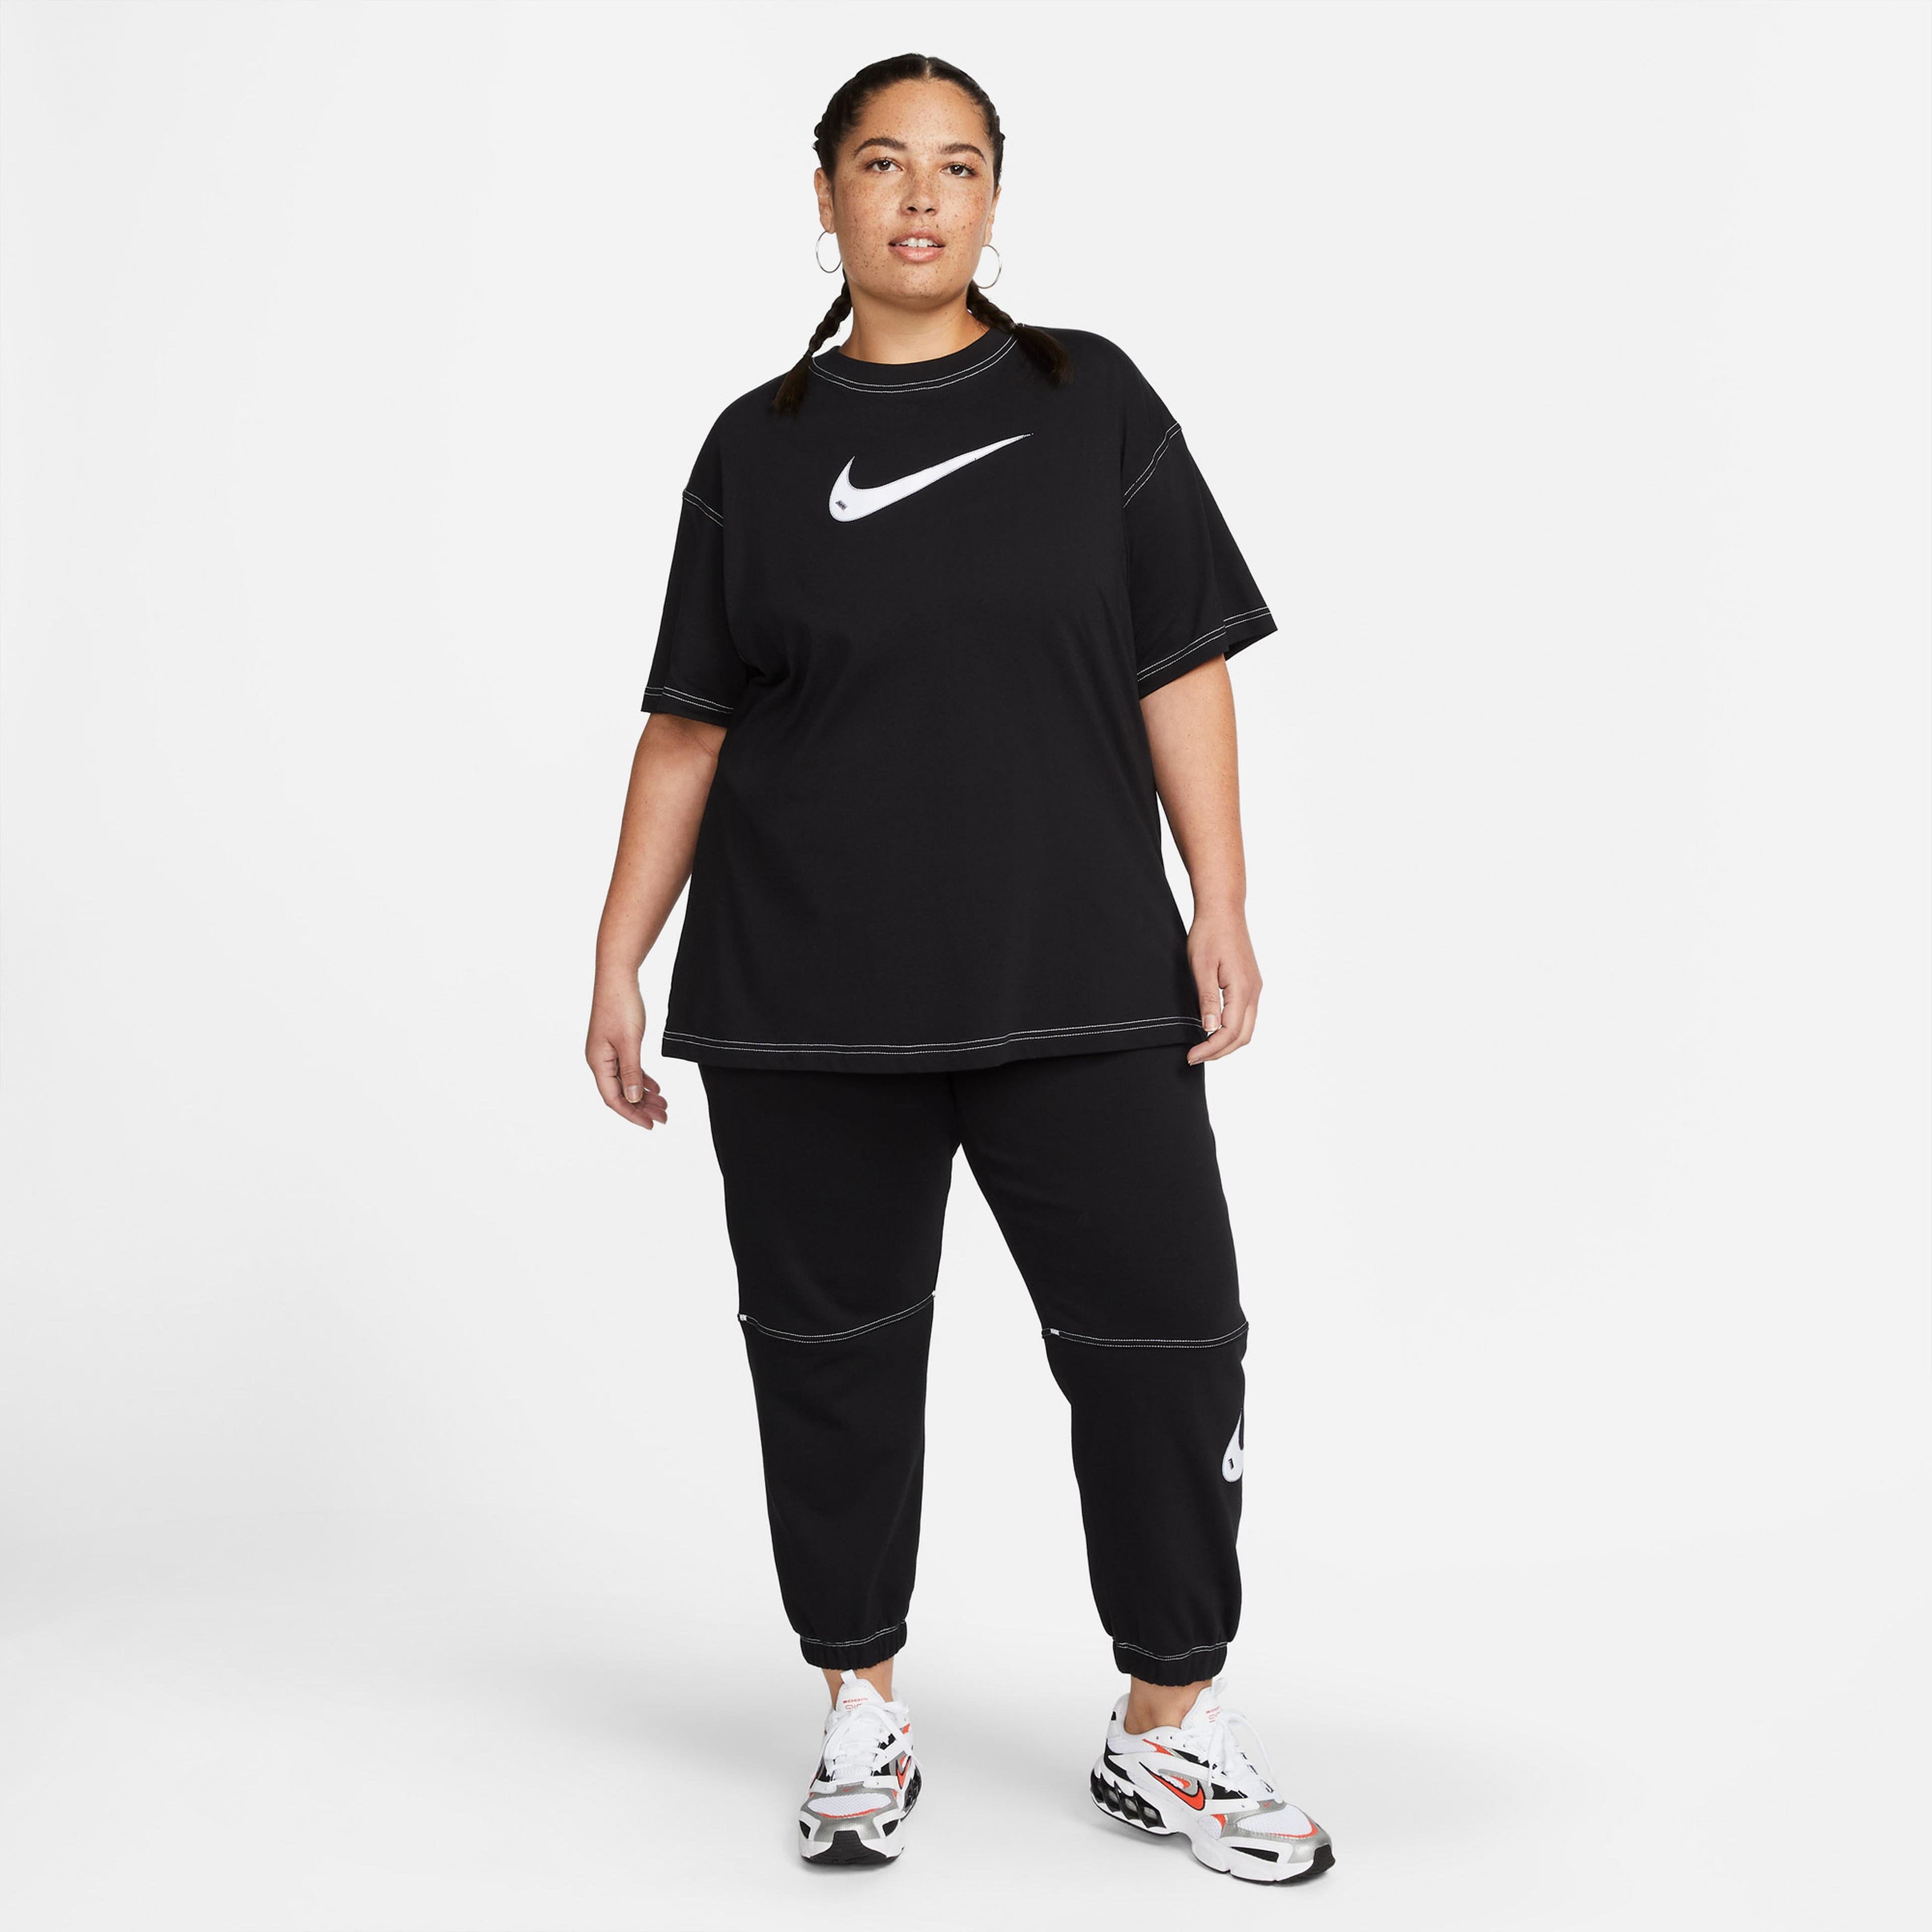 Nike Sportswear Swoosh Kadın Siyah T-Shirt